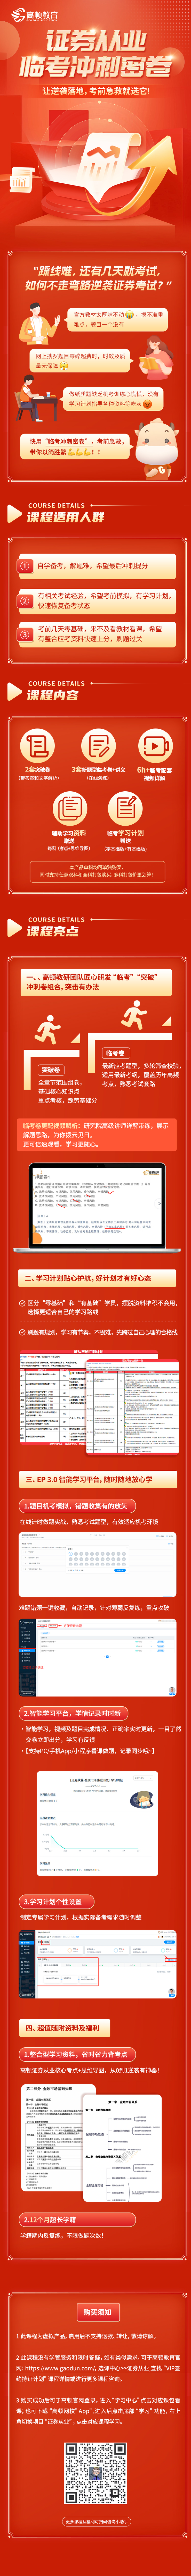 https://simg01.gaodunwangxiao.com/uploadfiles/product-center/202310/31/145f6_20231031132507.jpg